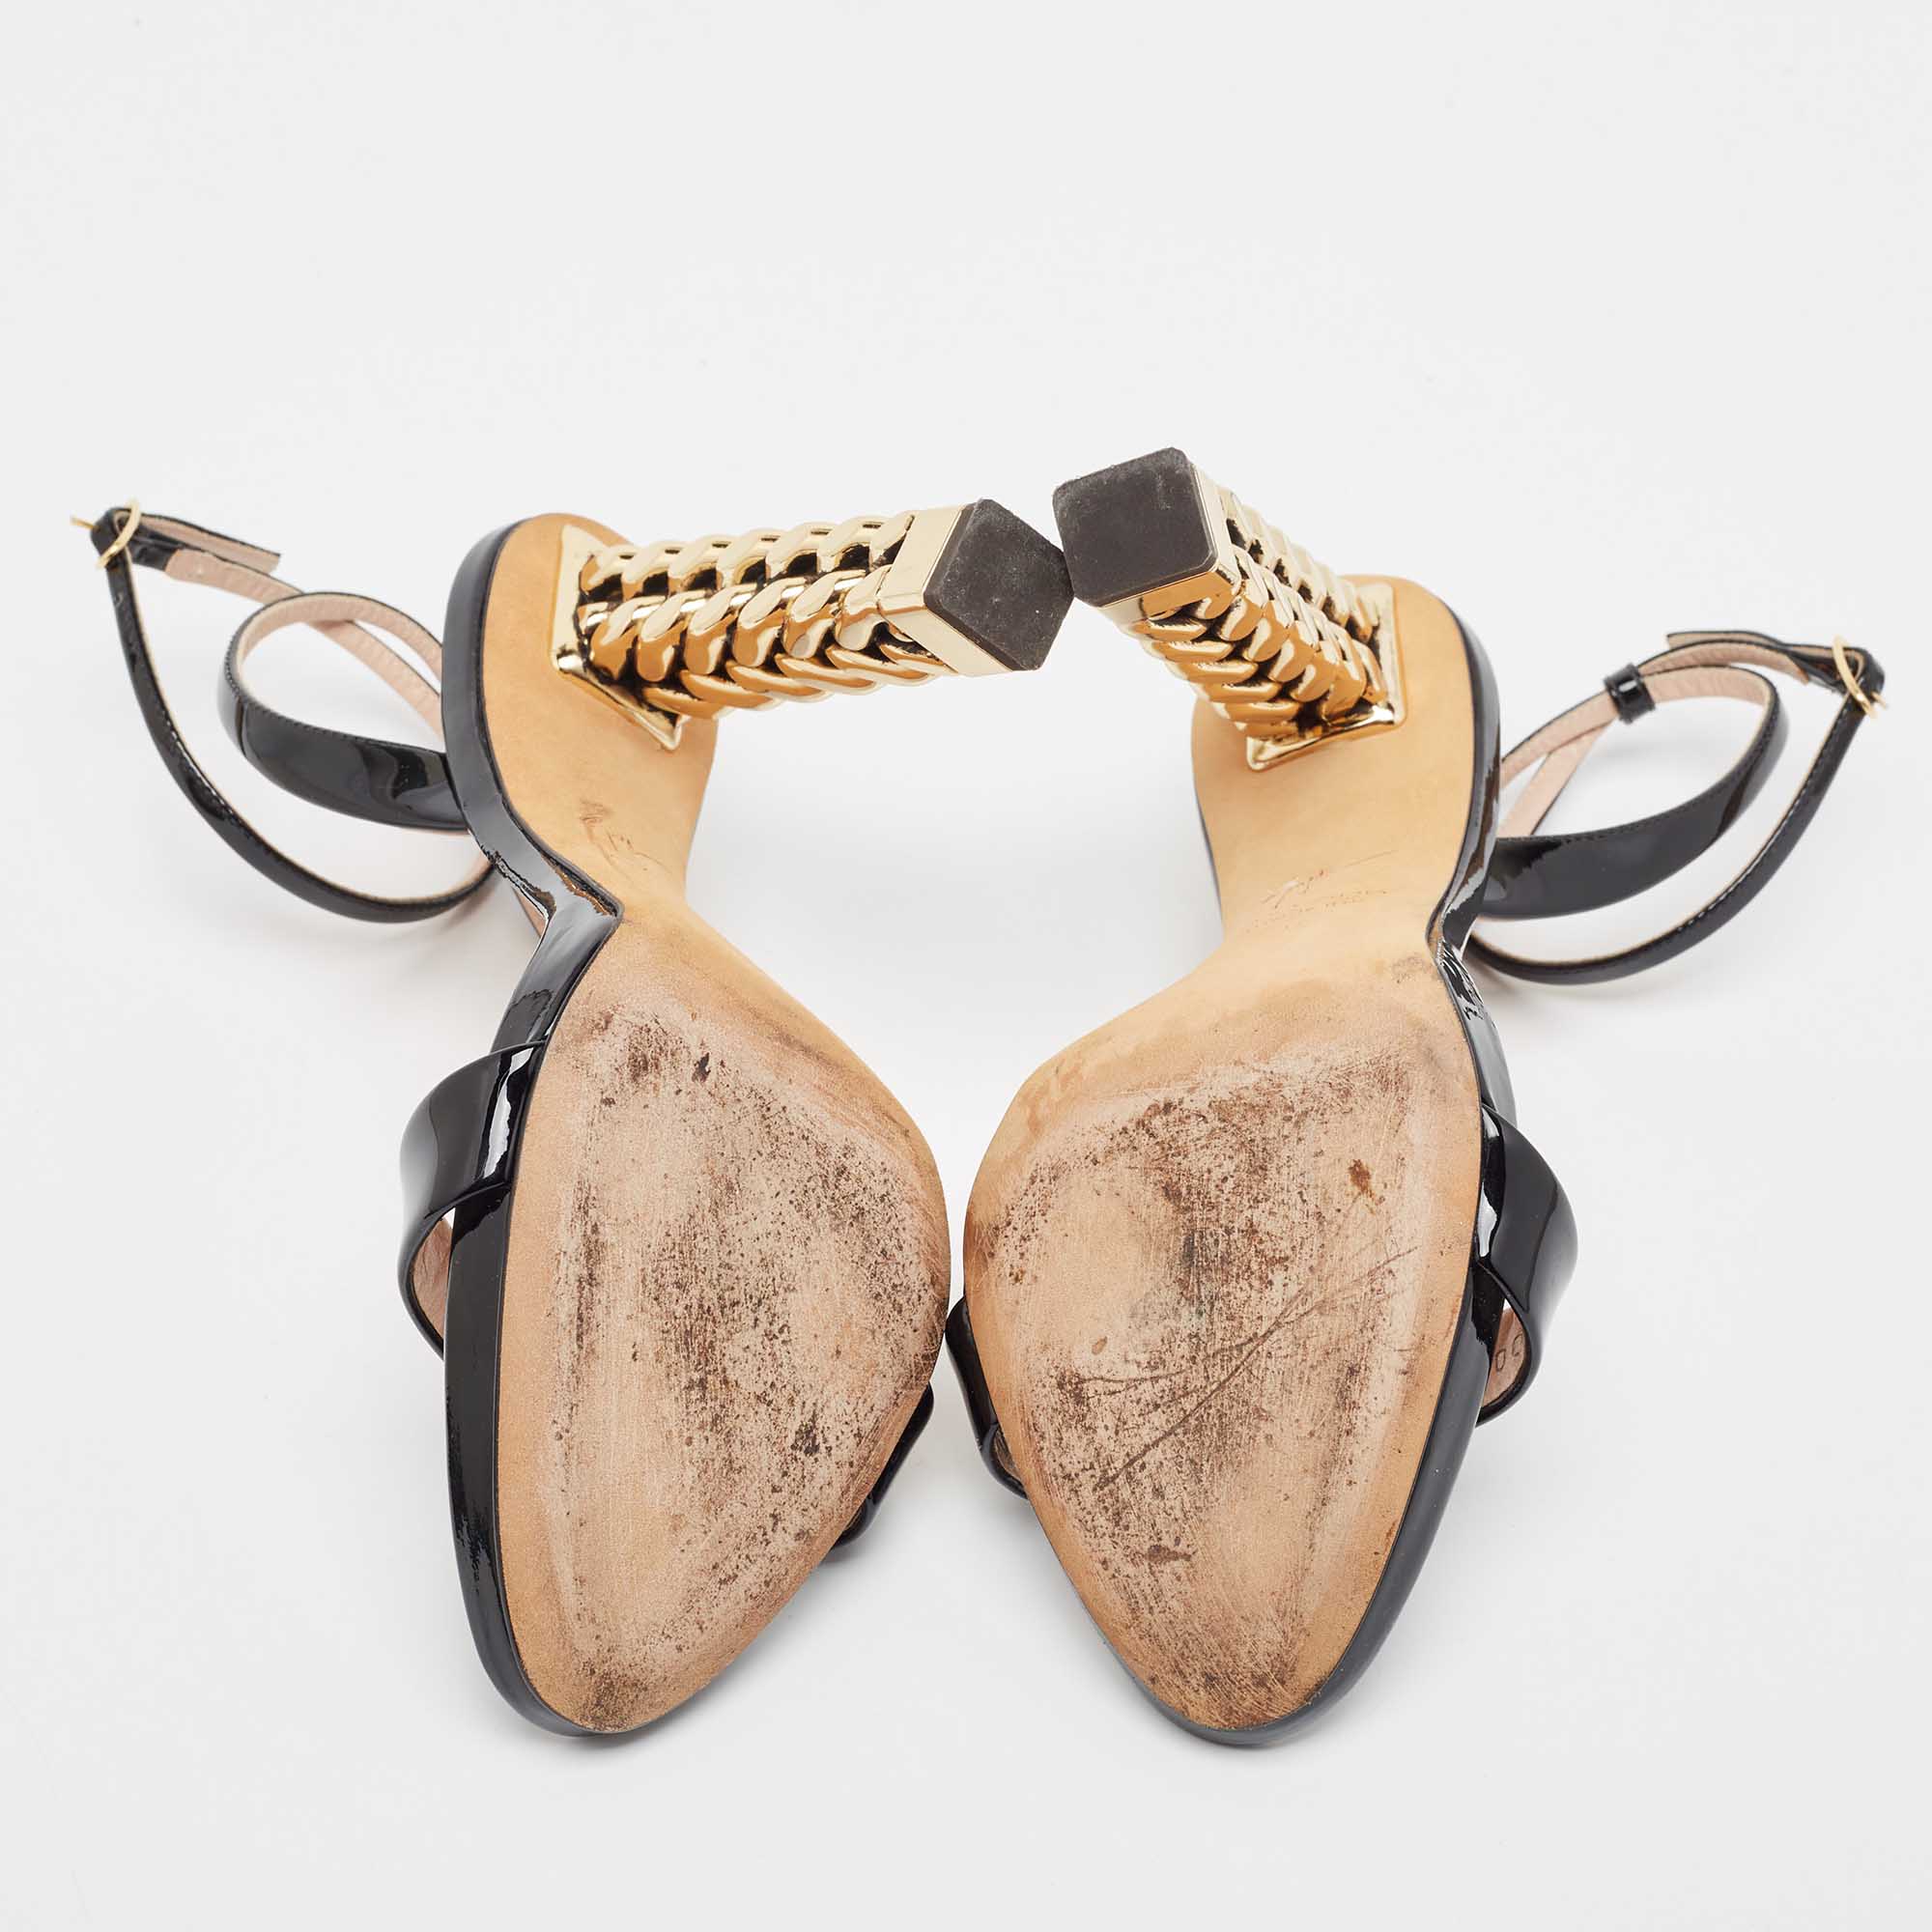 Giuseppe Zanotti Black Patent Leather Cathy Ankle Strap Sandals Size 37